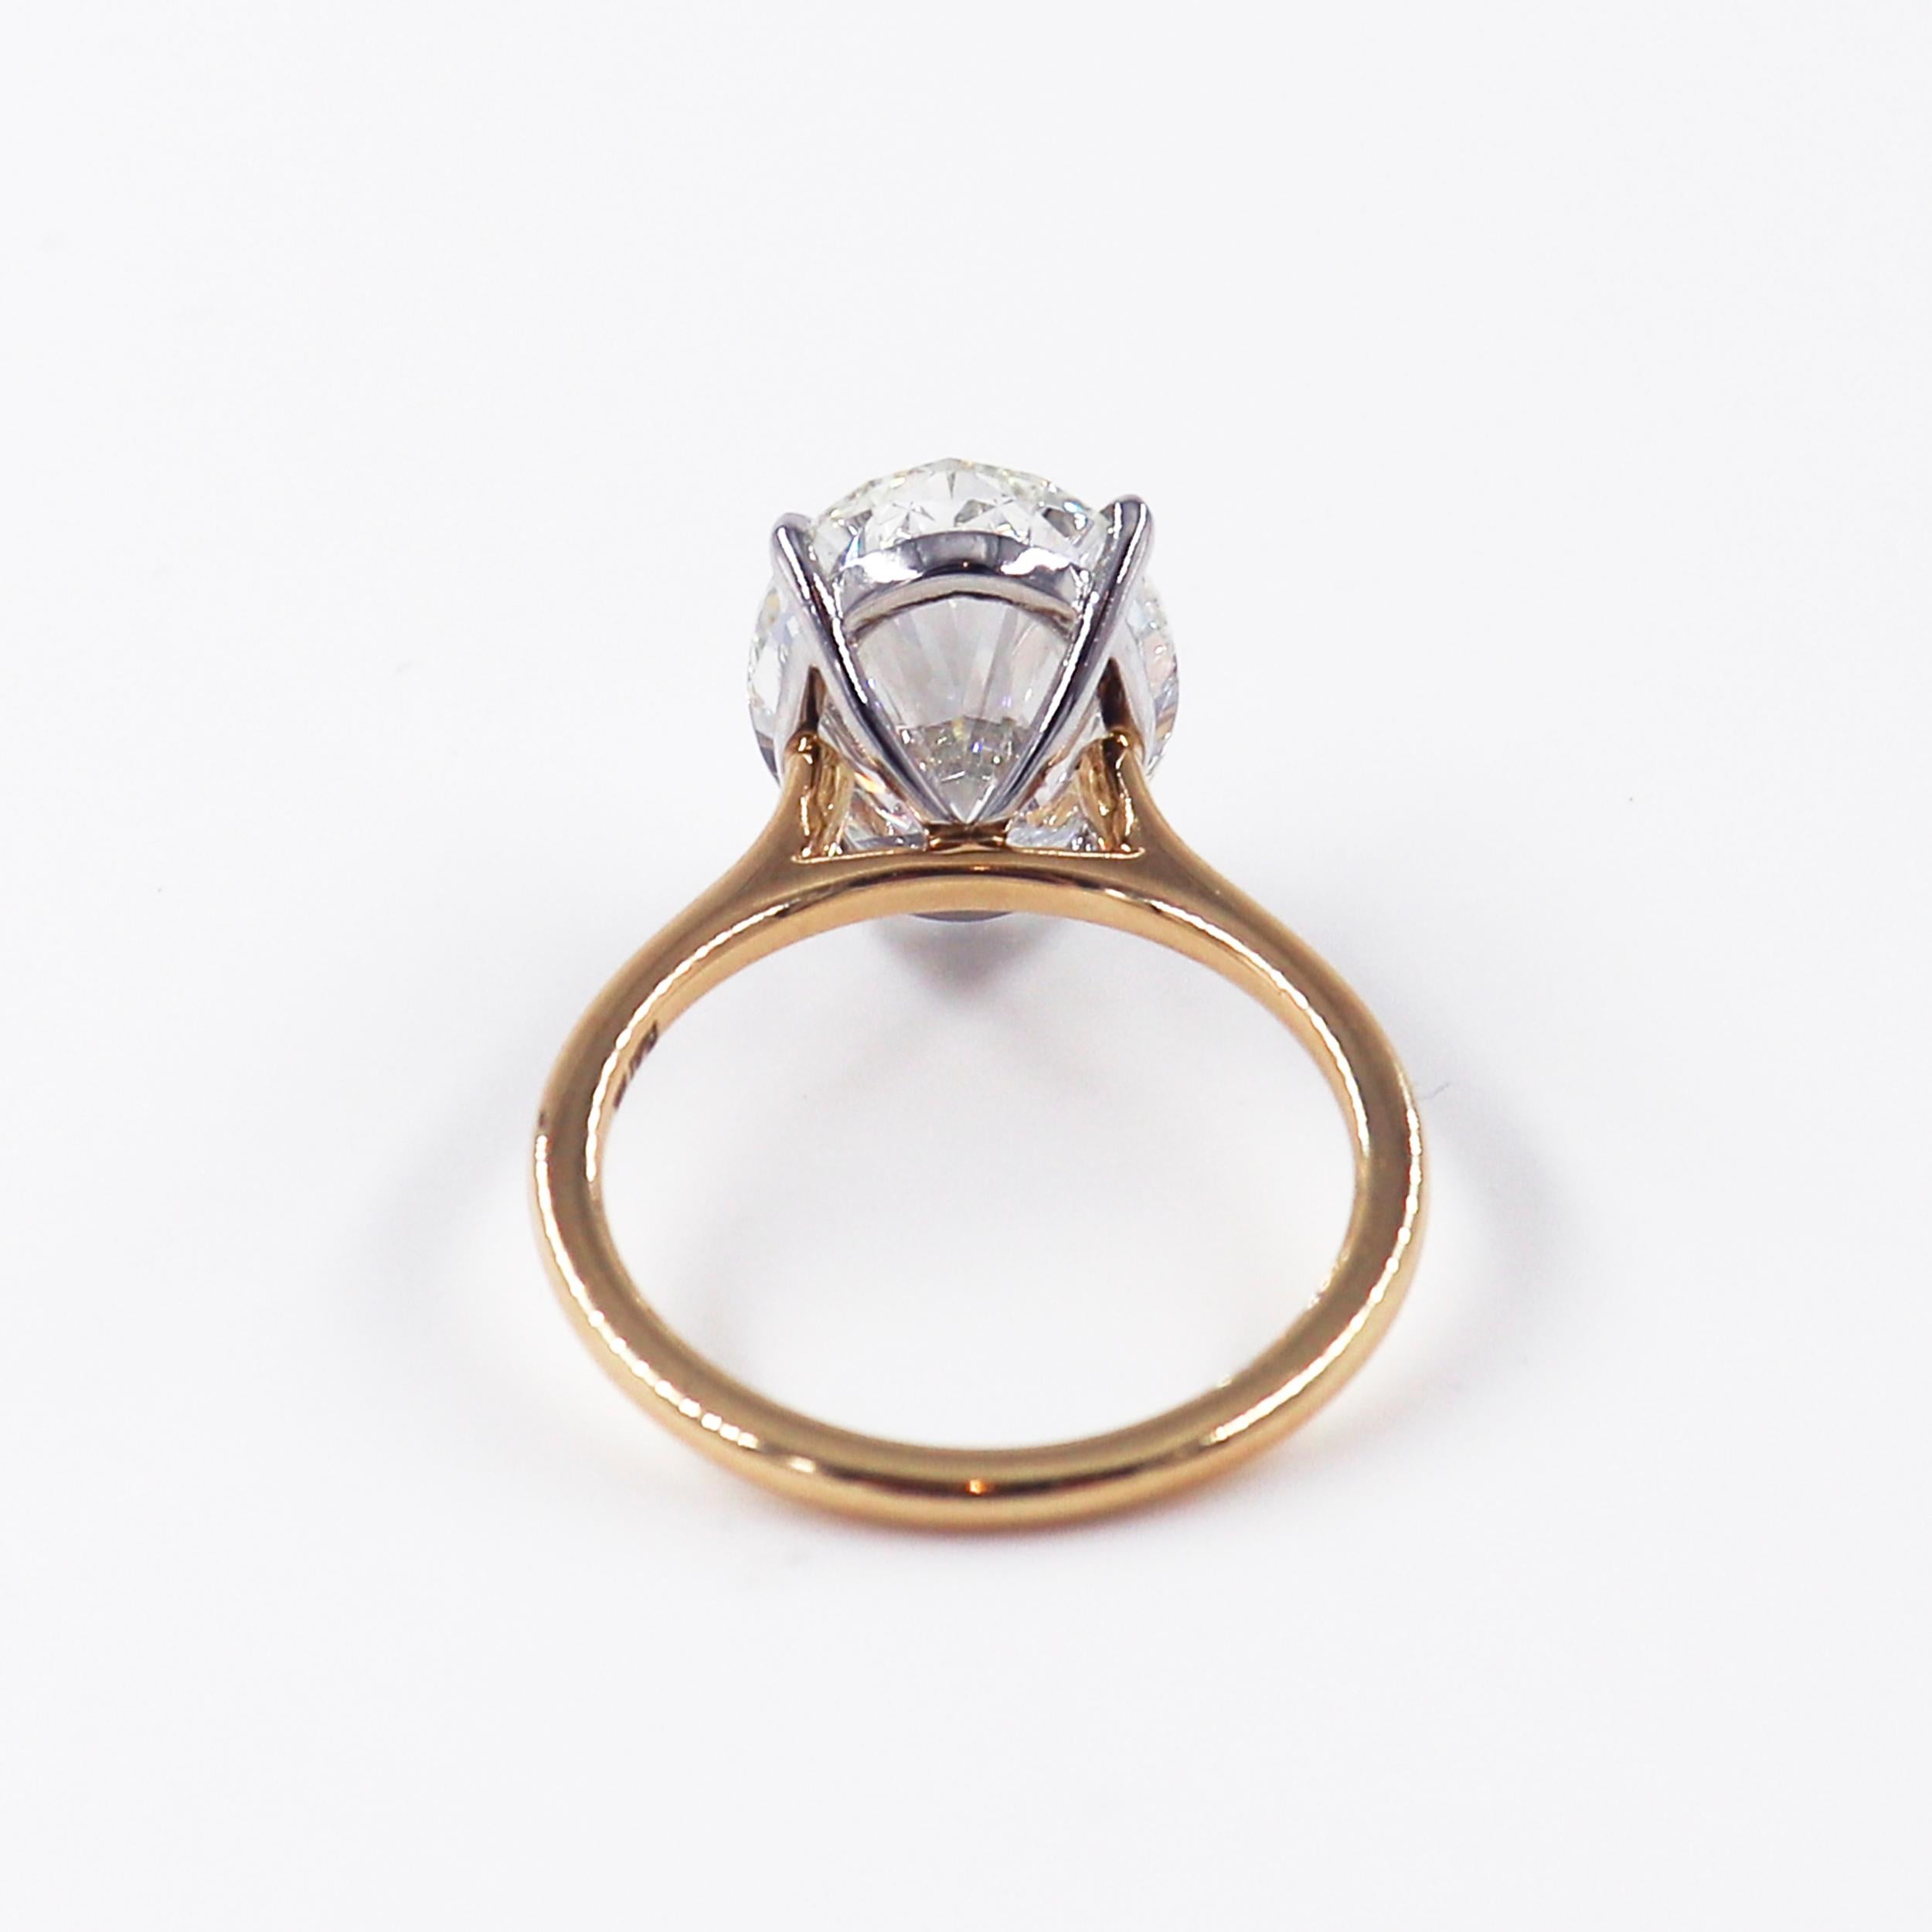 Modern J. Birnbach 5.36 carat GIA Certified I SI2 Oval Diamond Ring